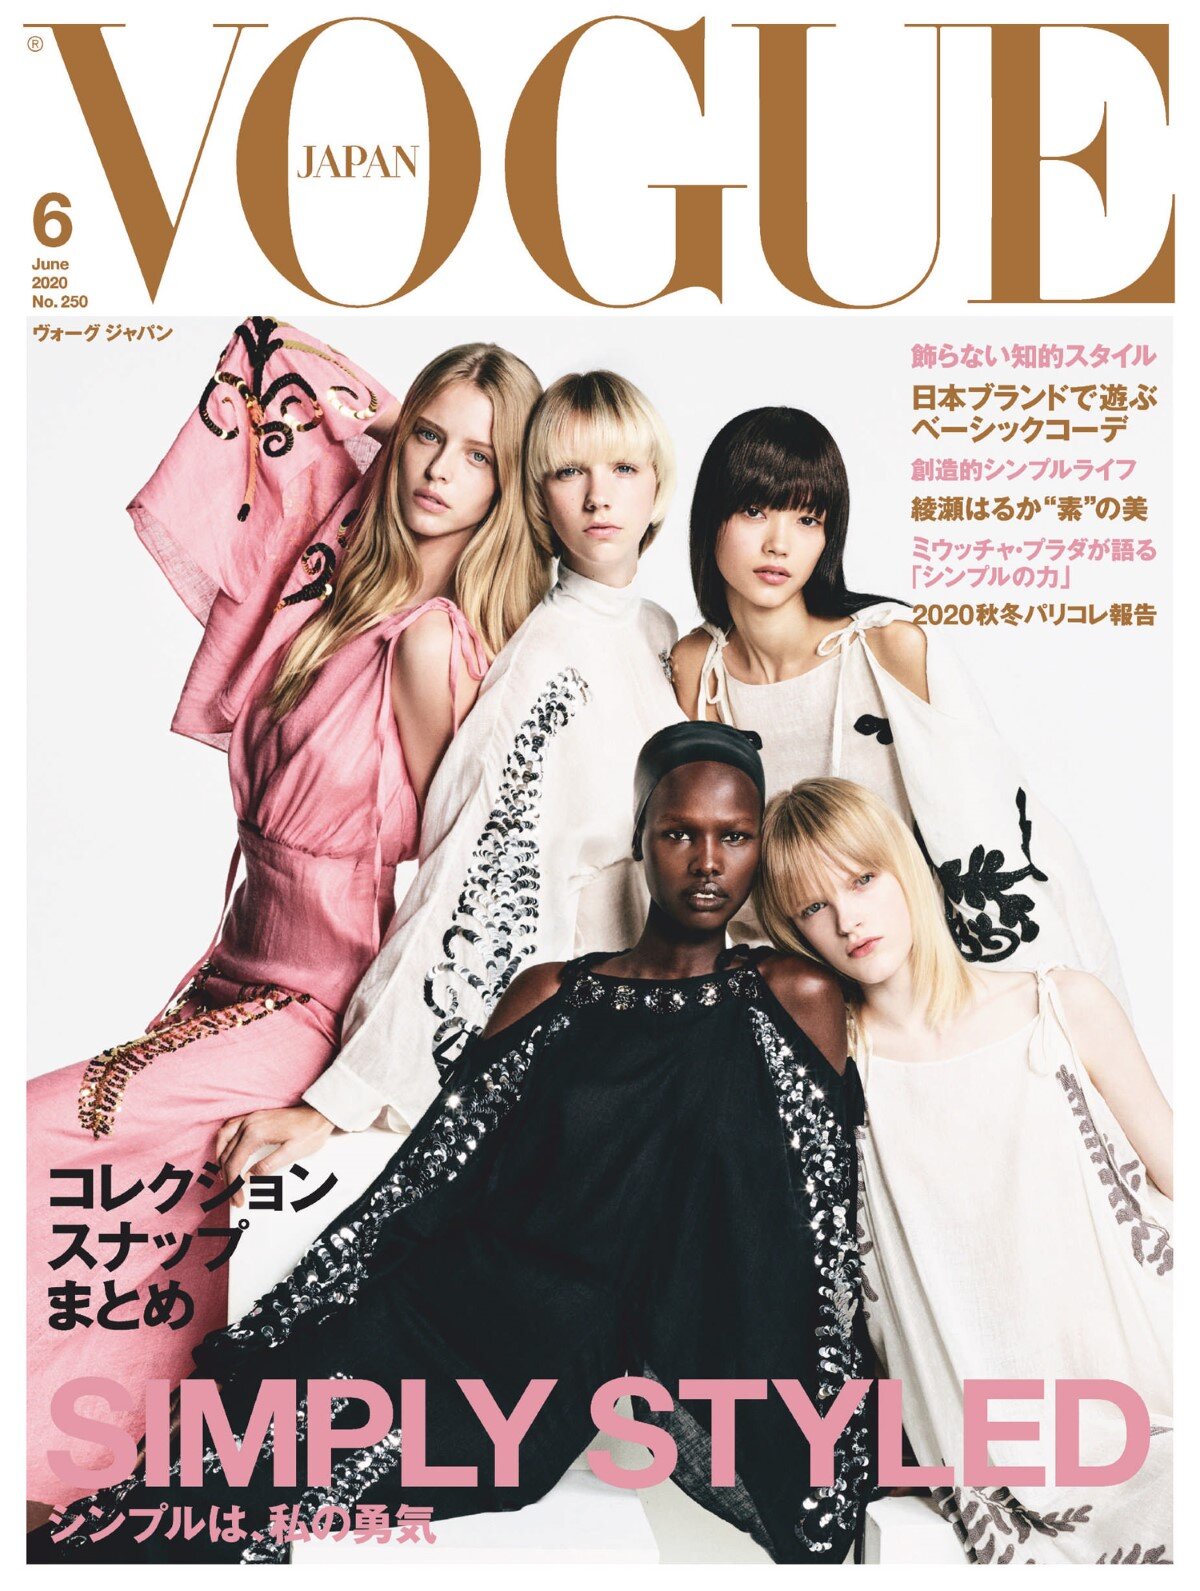 Luigi Iango Vogue Japan June 2020  Simply Beautiful  (8).jpg